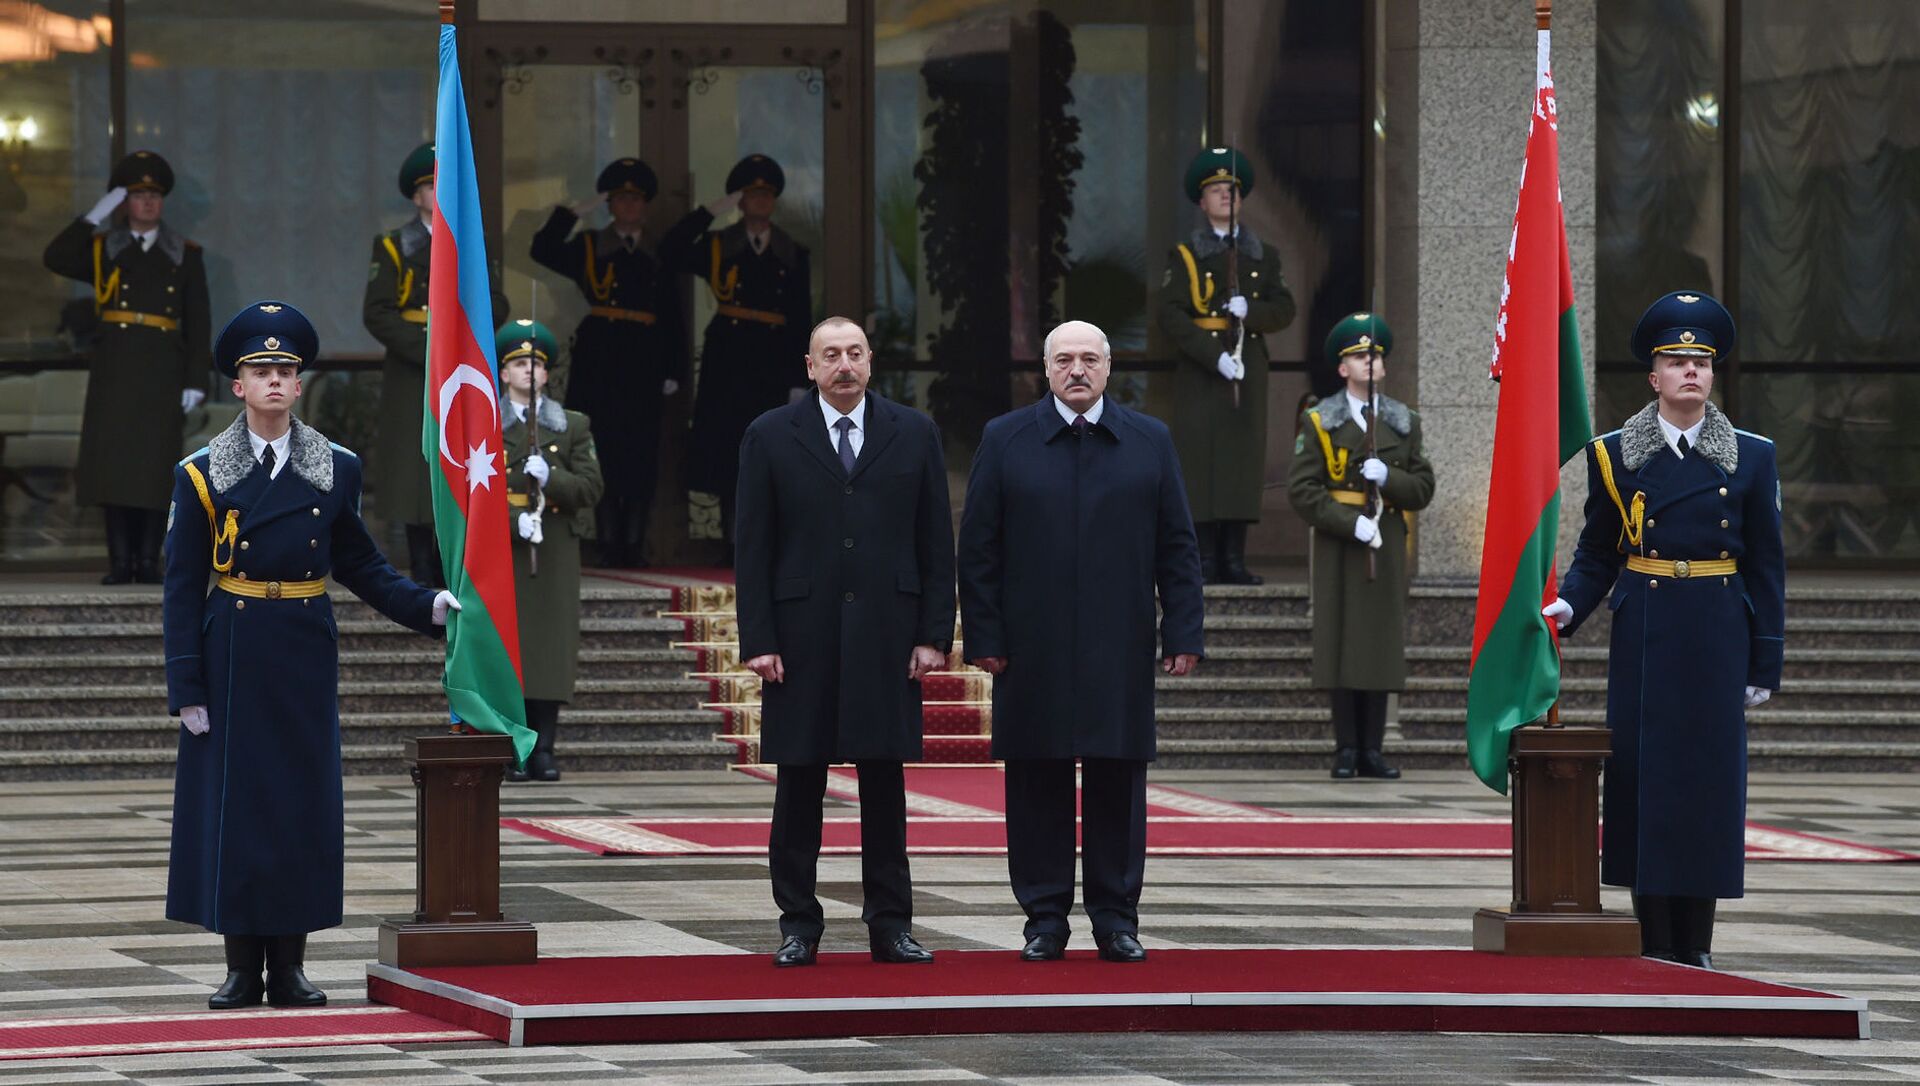 Президент Белоруссии Александр Лукашенко и президент Азербайджана Ильхам Алиев во время церемонии встречи, фото из архив - Sputnik Азербайджан, 1920, 12.04.2021